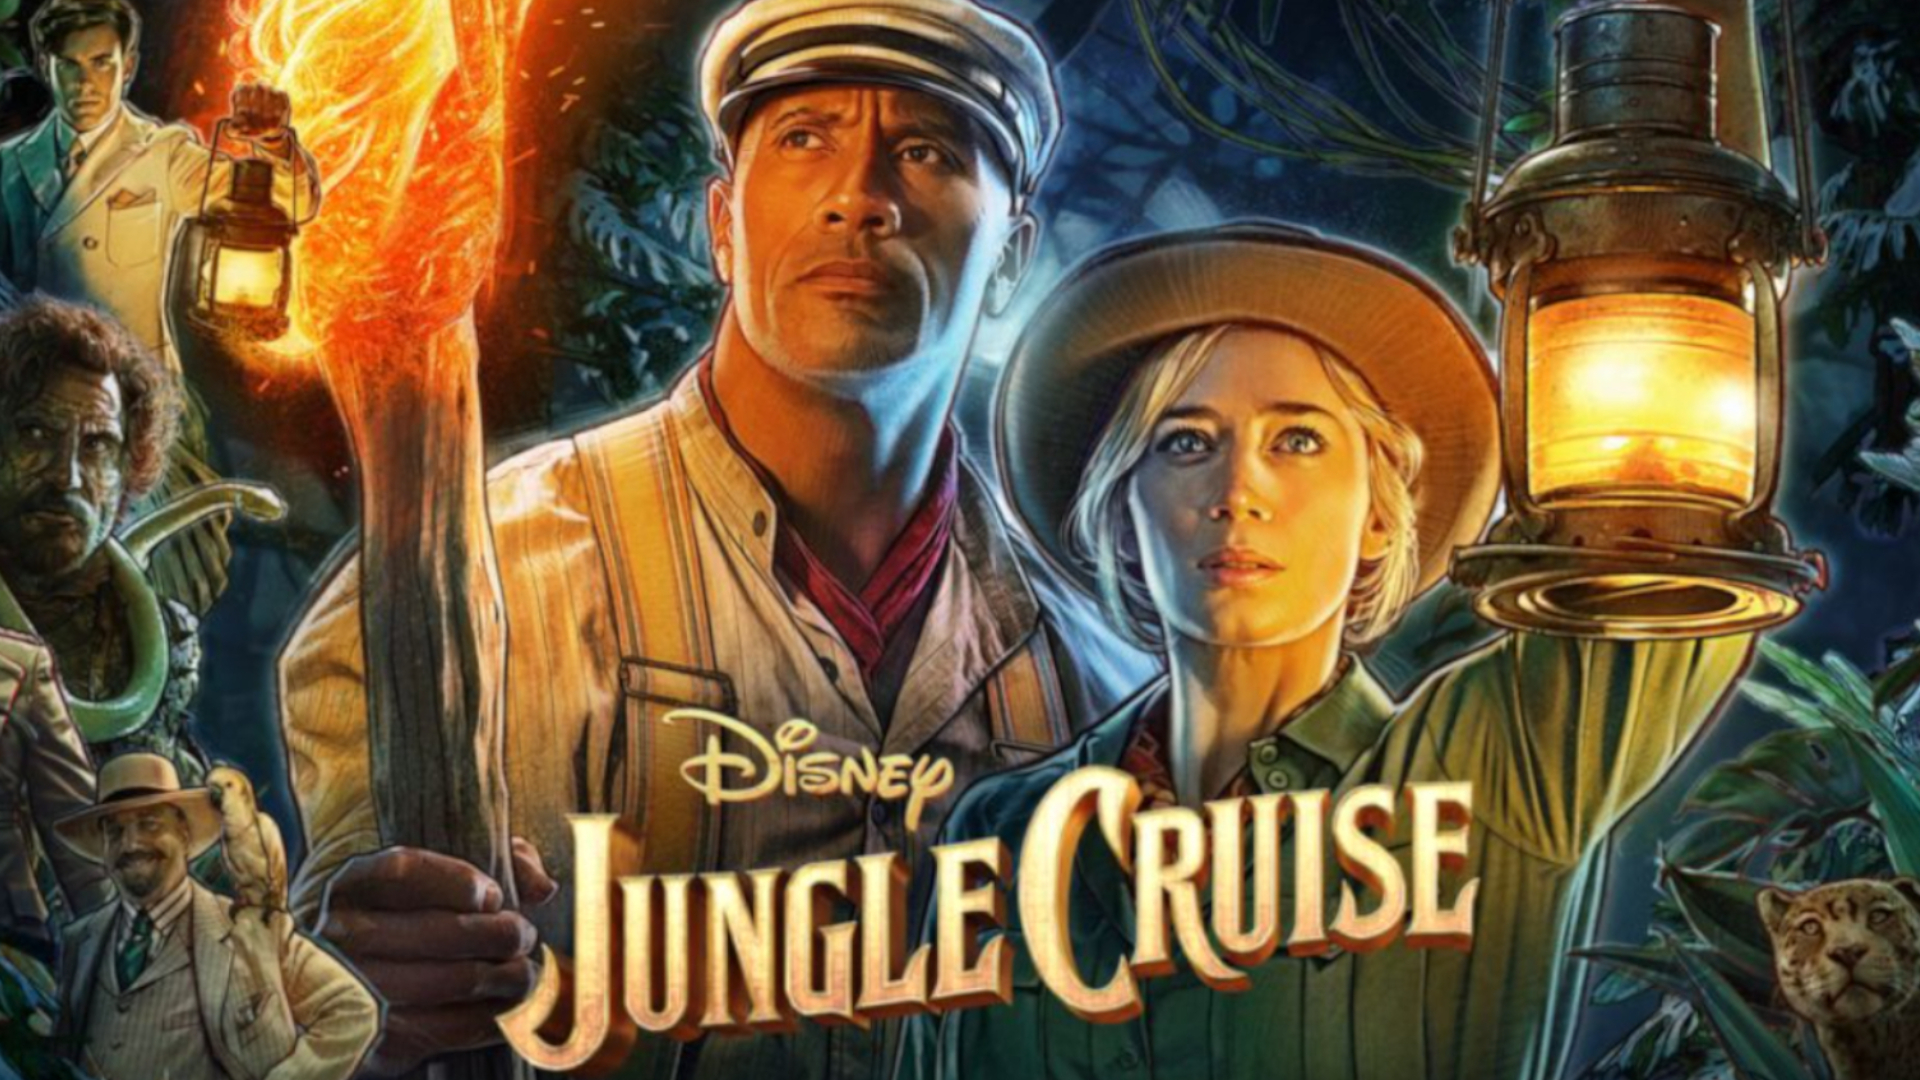 Cruise movie jungle watch online full Jungle Cruise